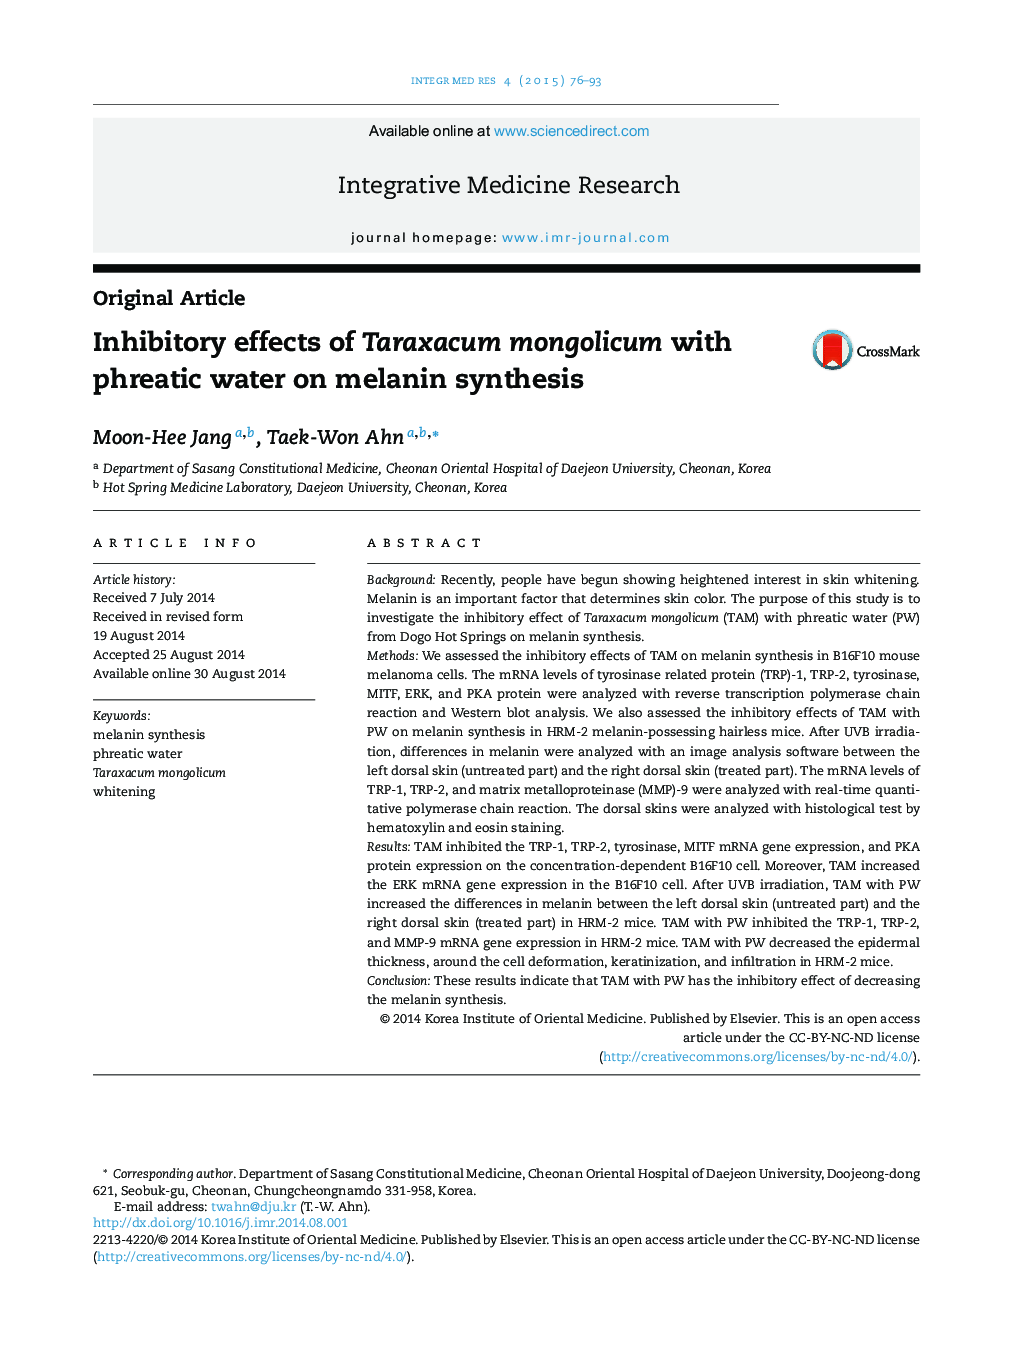 Inhibitory effects of Taraxacum mongolicum with phreatic water on melanin synthesis